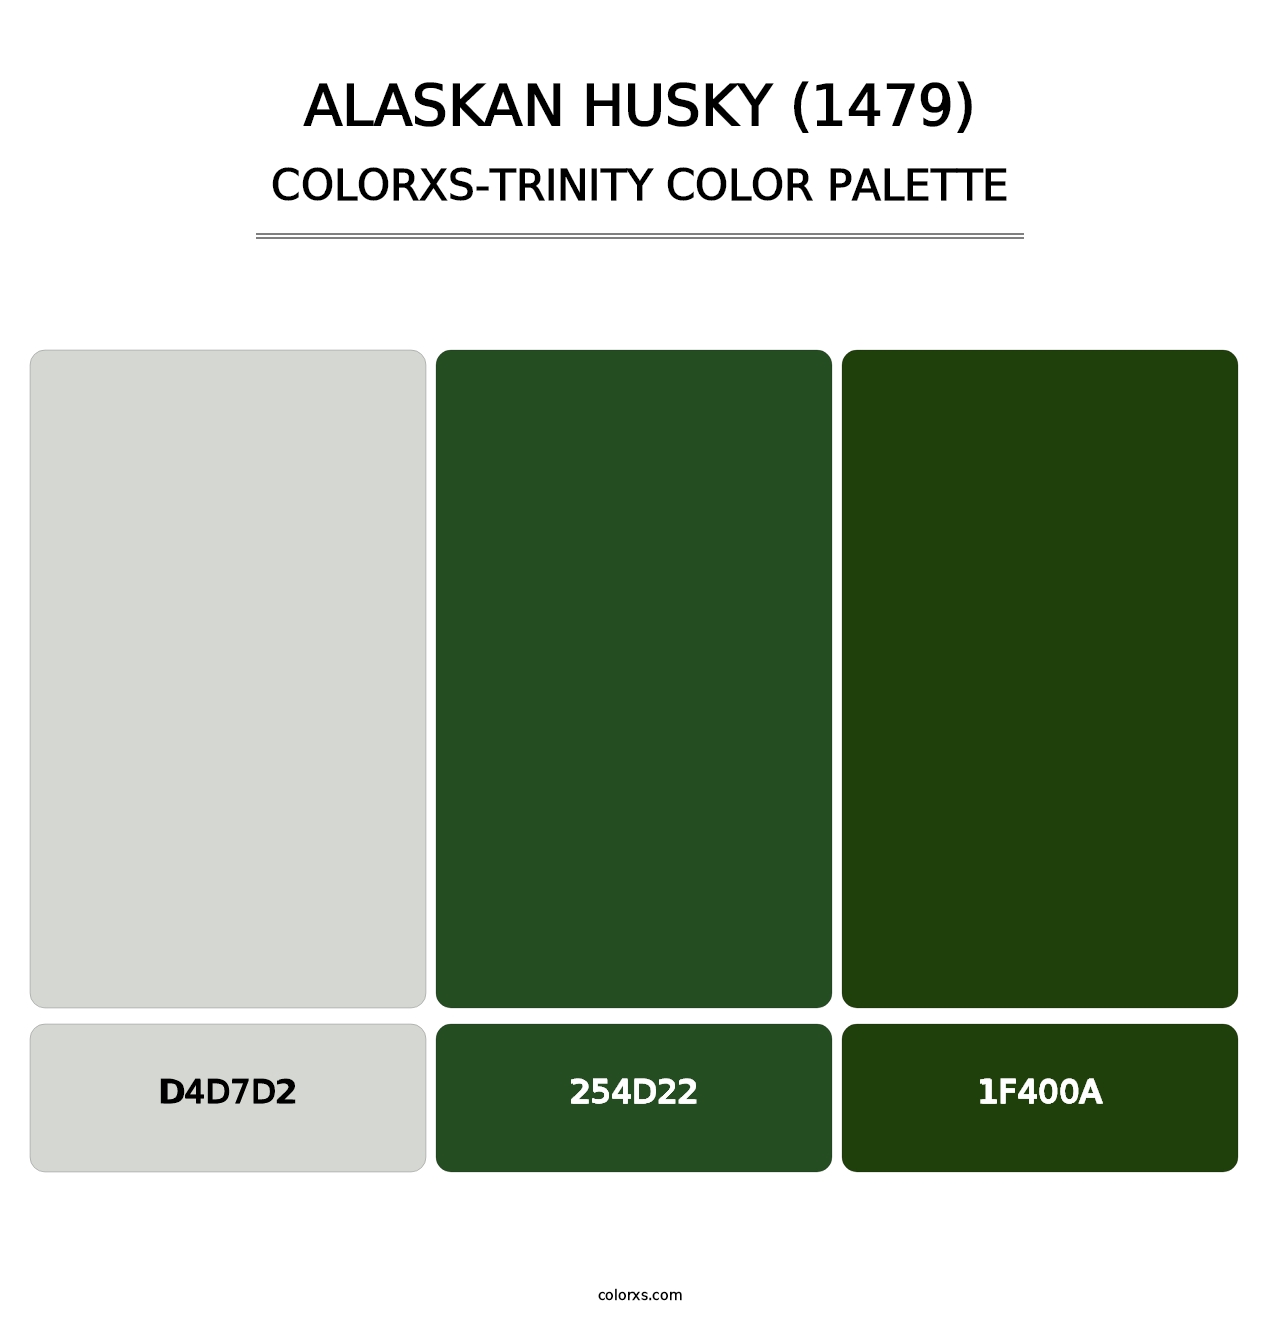 Alaskan Husky (1479) - Colorxs Trinity Palette